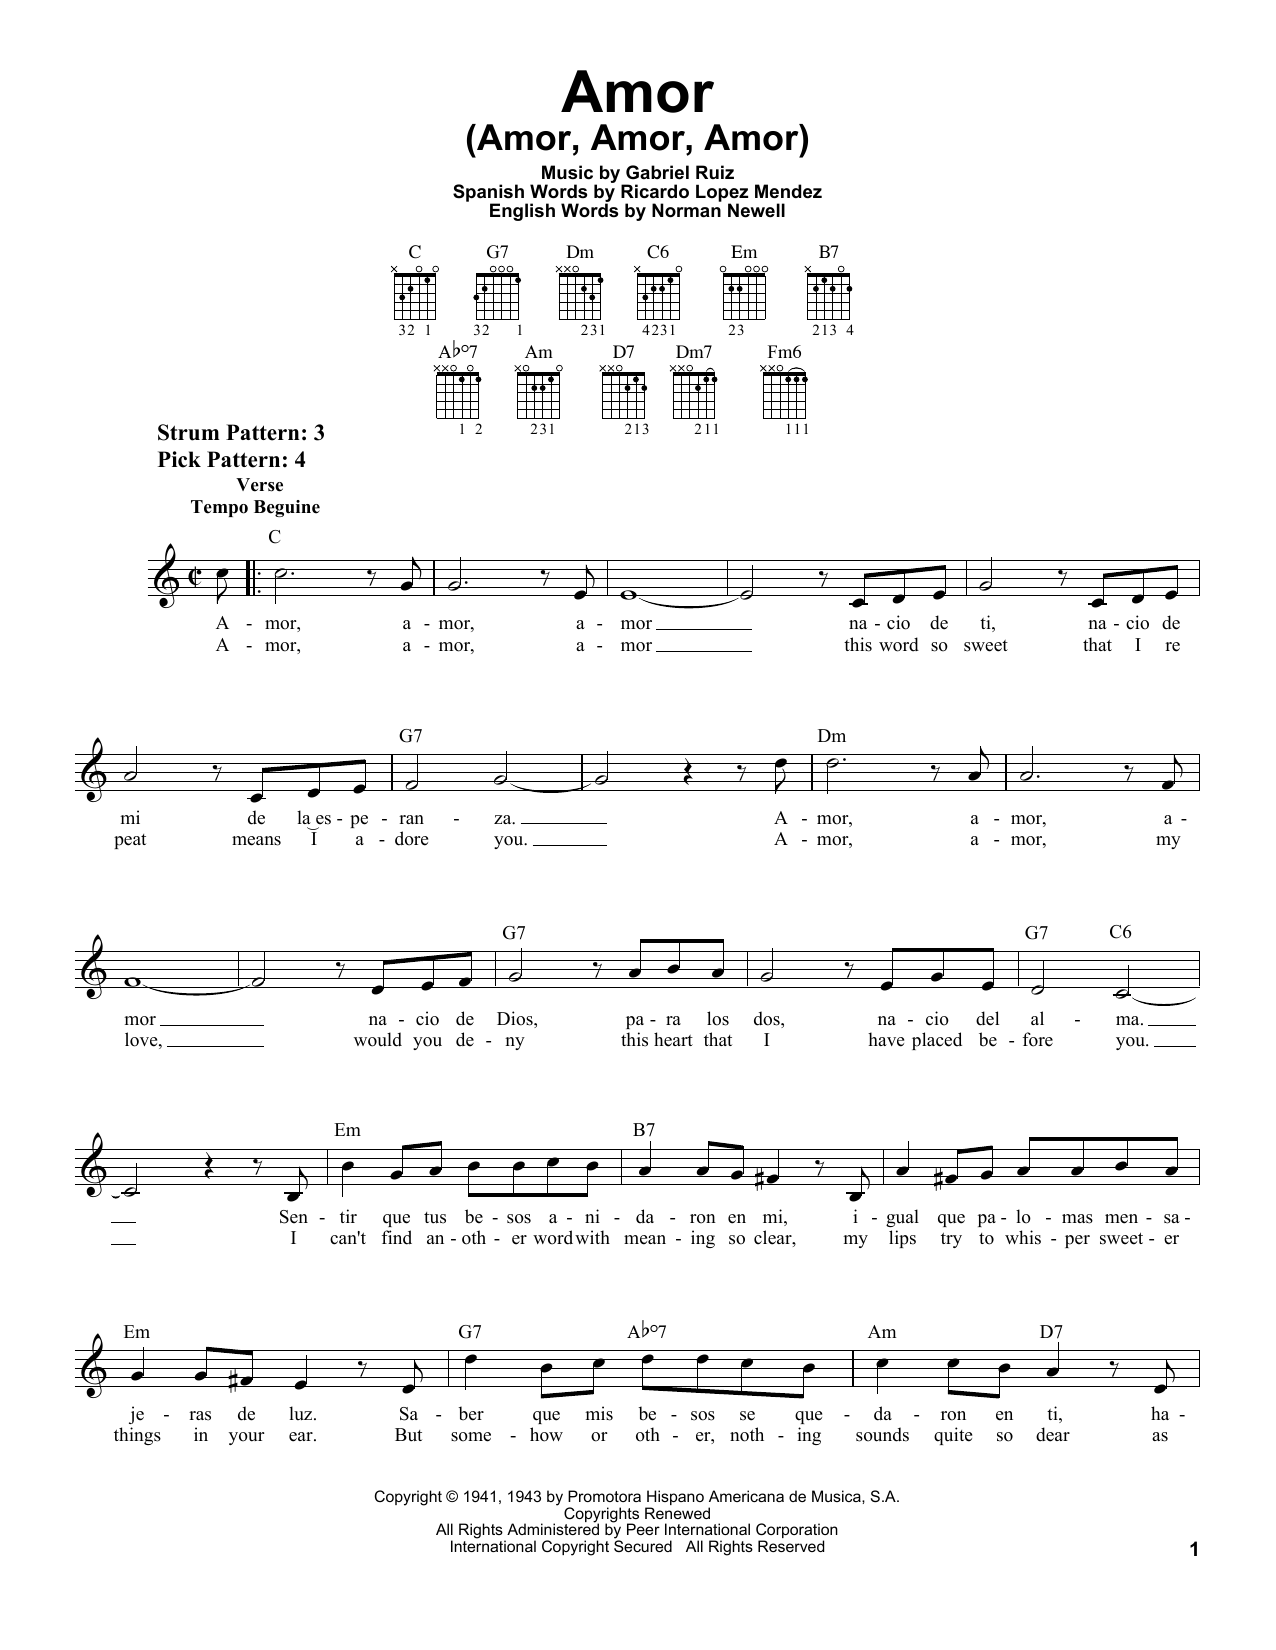 Gabriel Ruiz Amor (Amor, Amor, Amor) Sheet Music Notes & Chords for Piano - Download or Print PDF